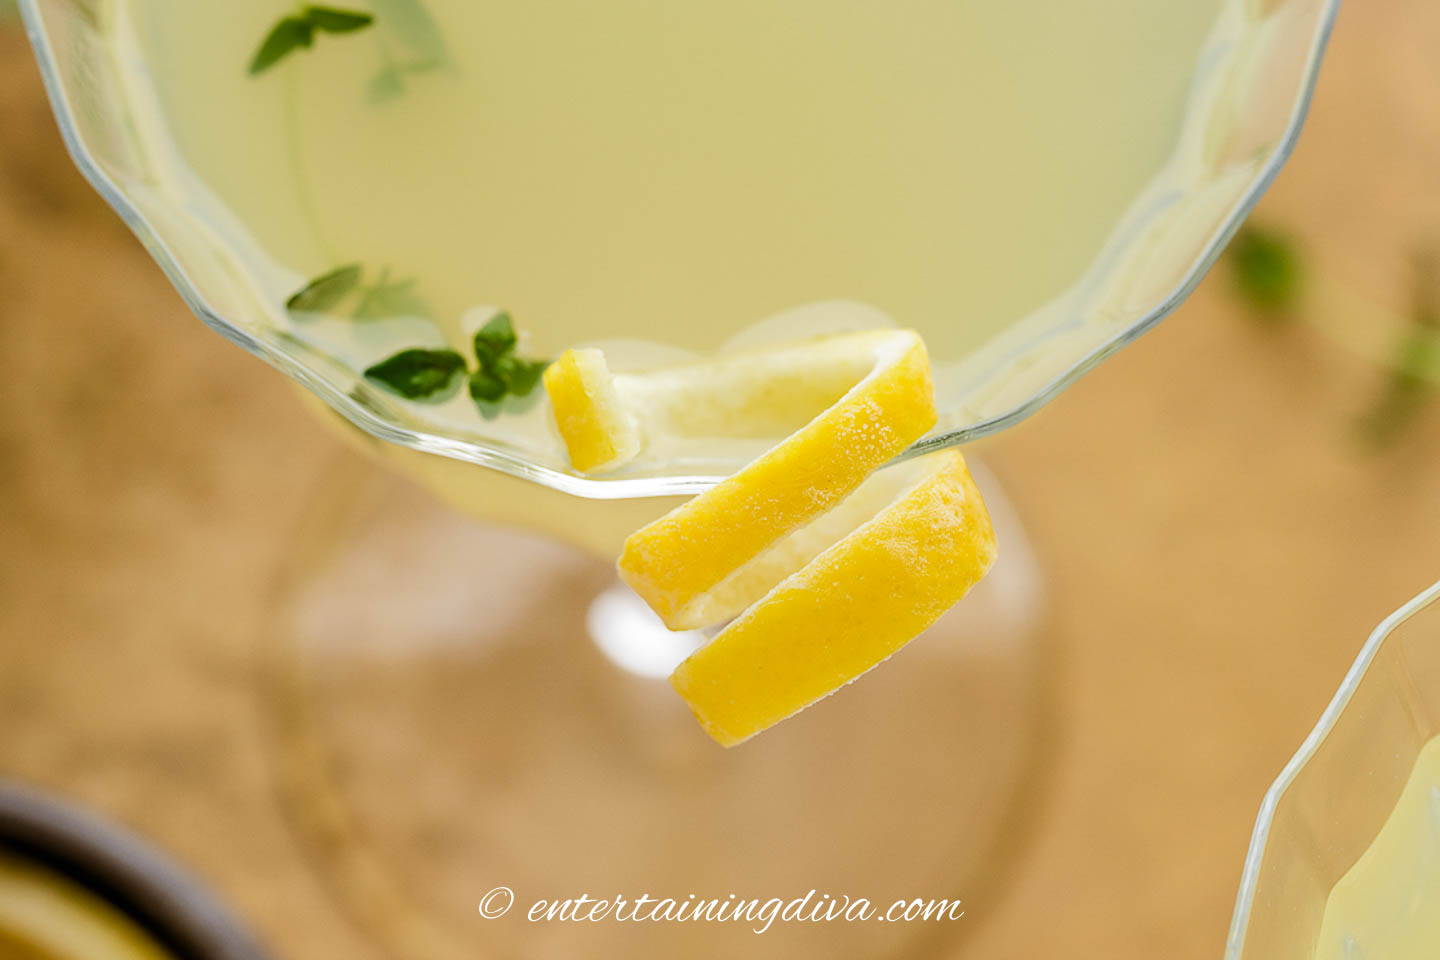 Lemon twist garnish on the side of a glass